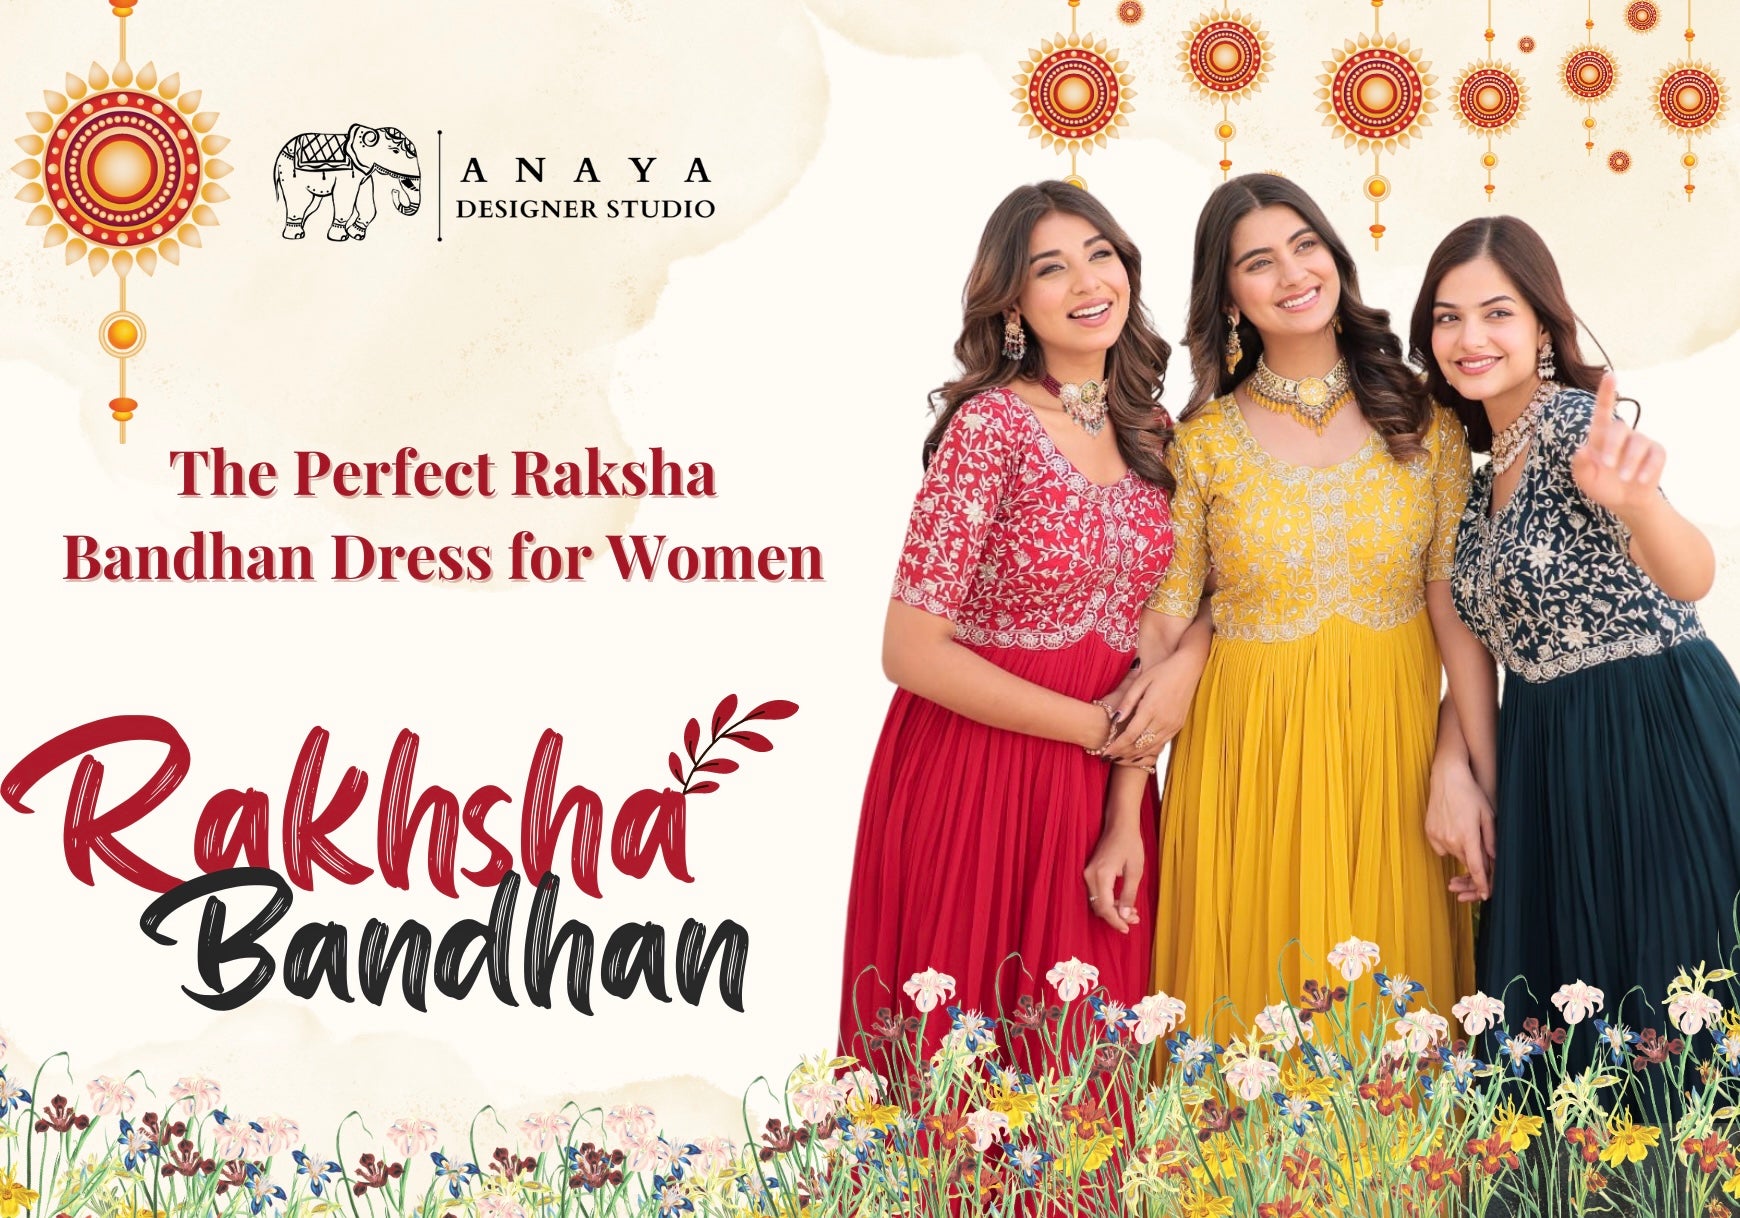 Finding the Perfect Raksha Bandhan Dress for Women